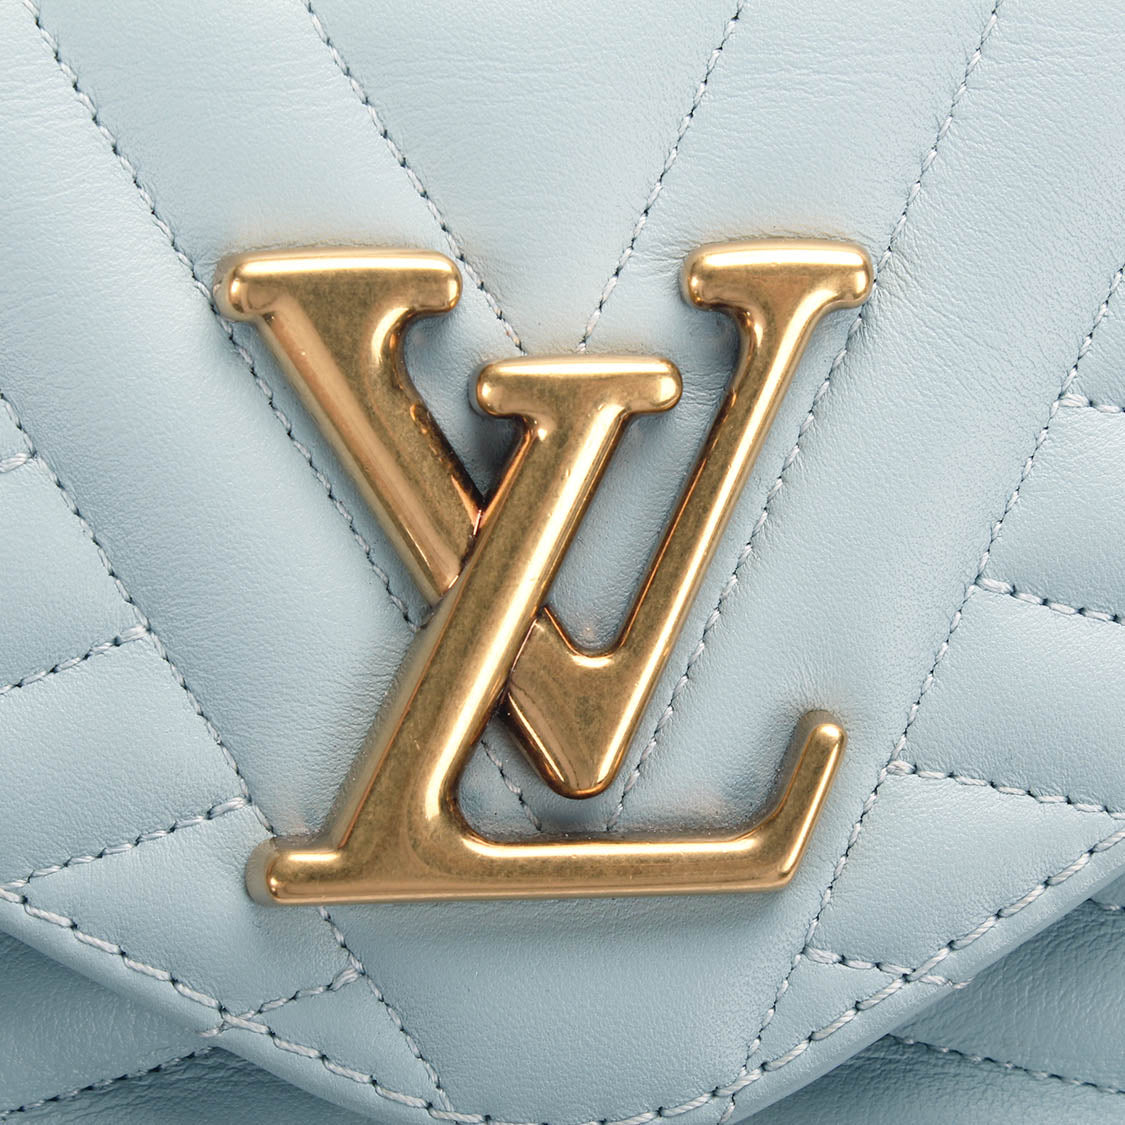 Louis Vuitton New Wave PM in Porcelain Blue dust bag, box, tags